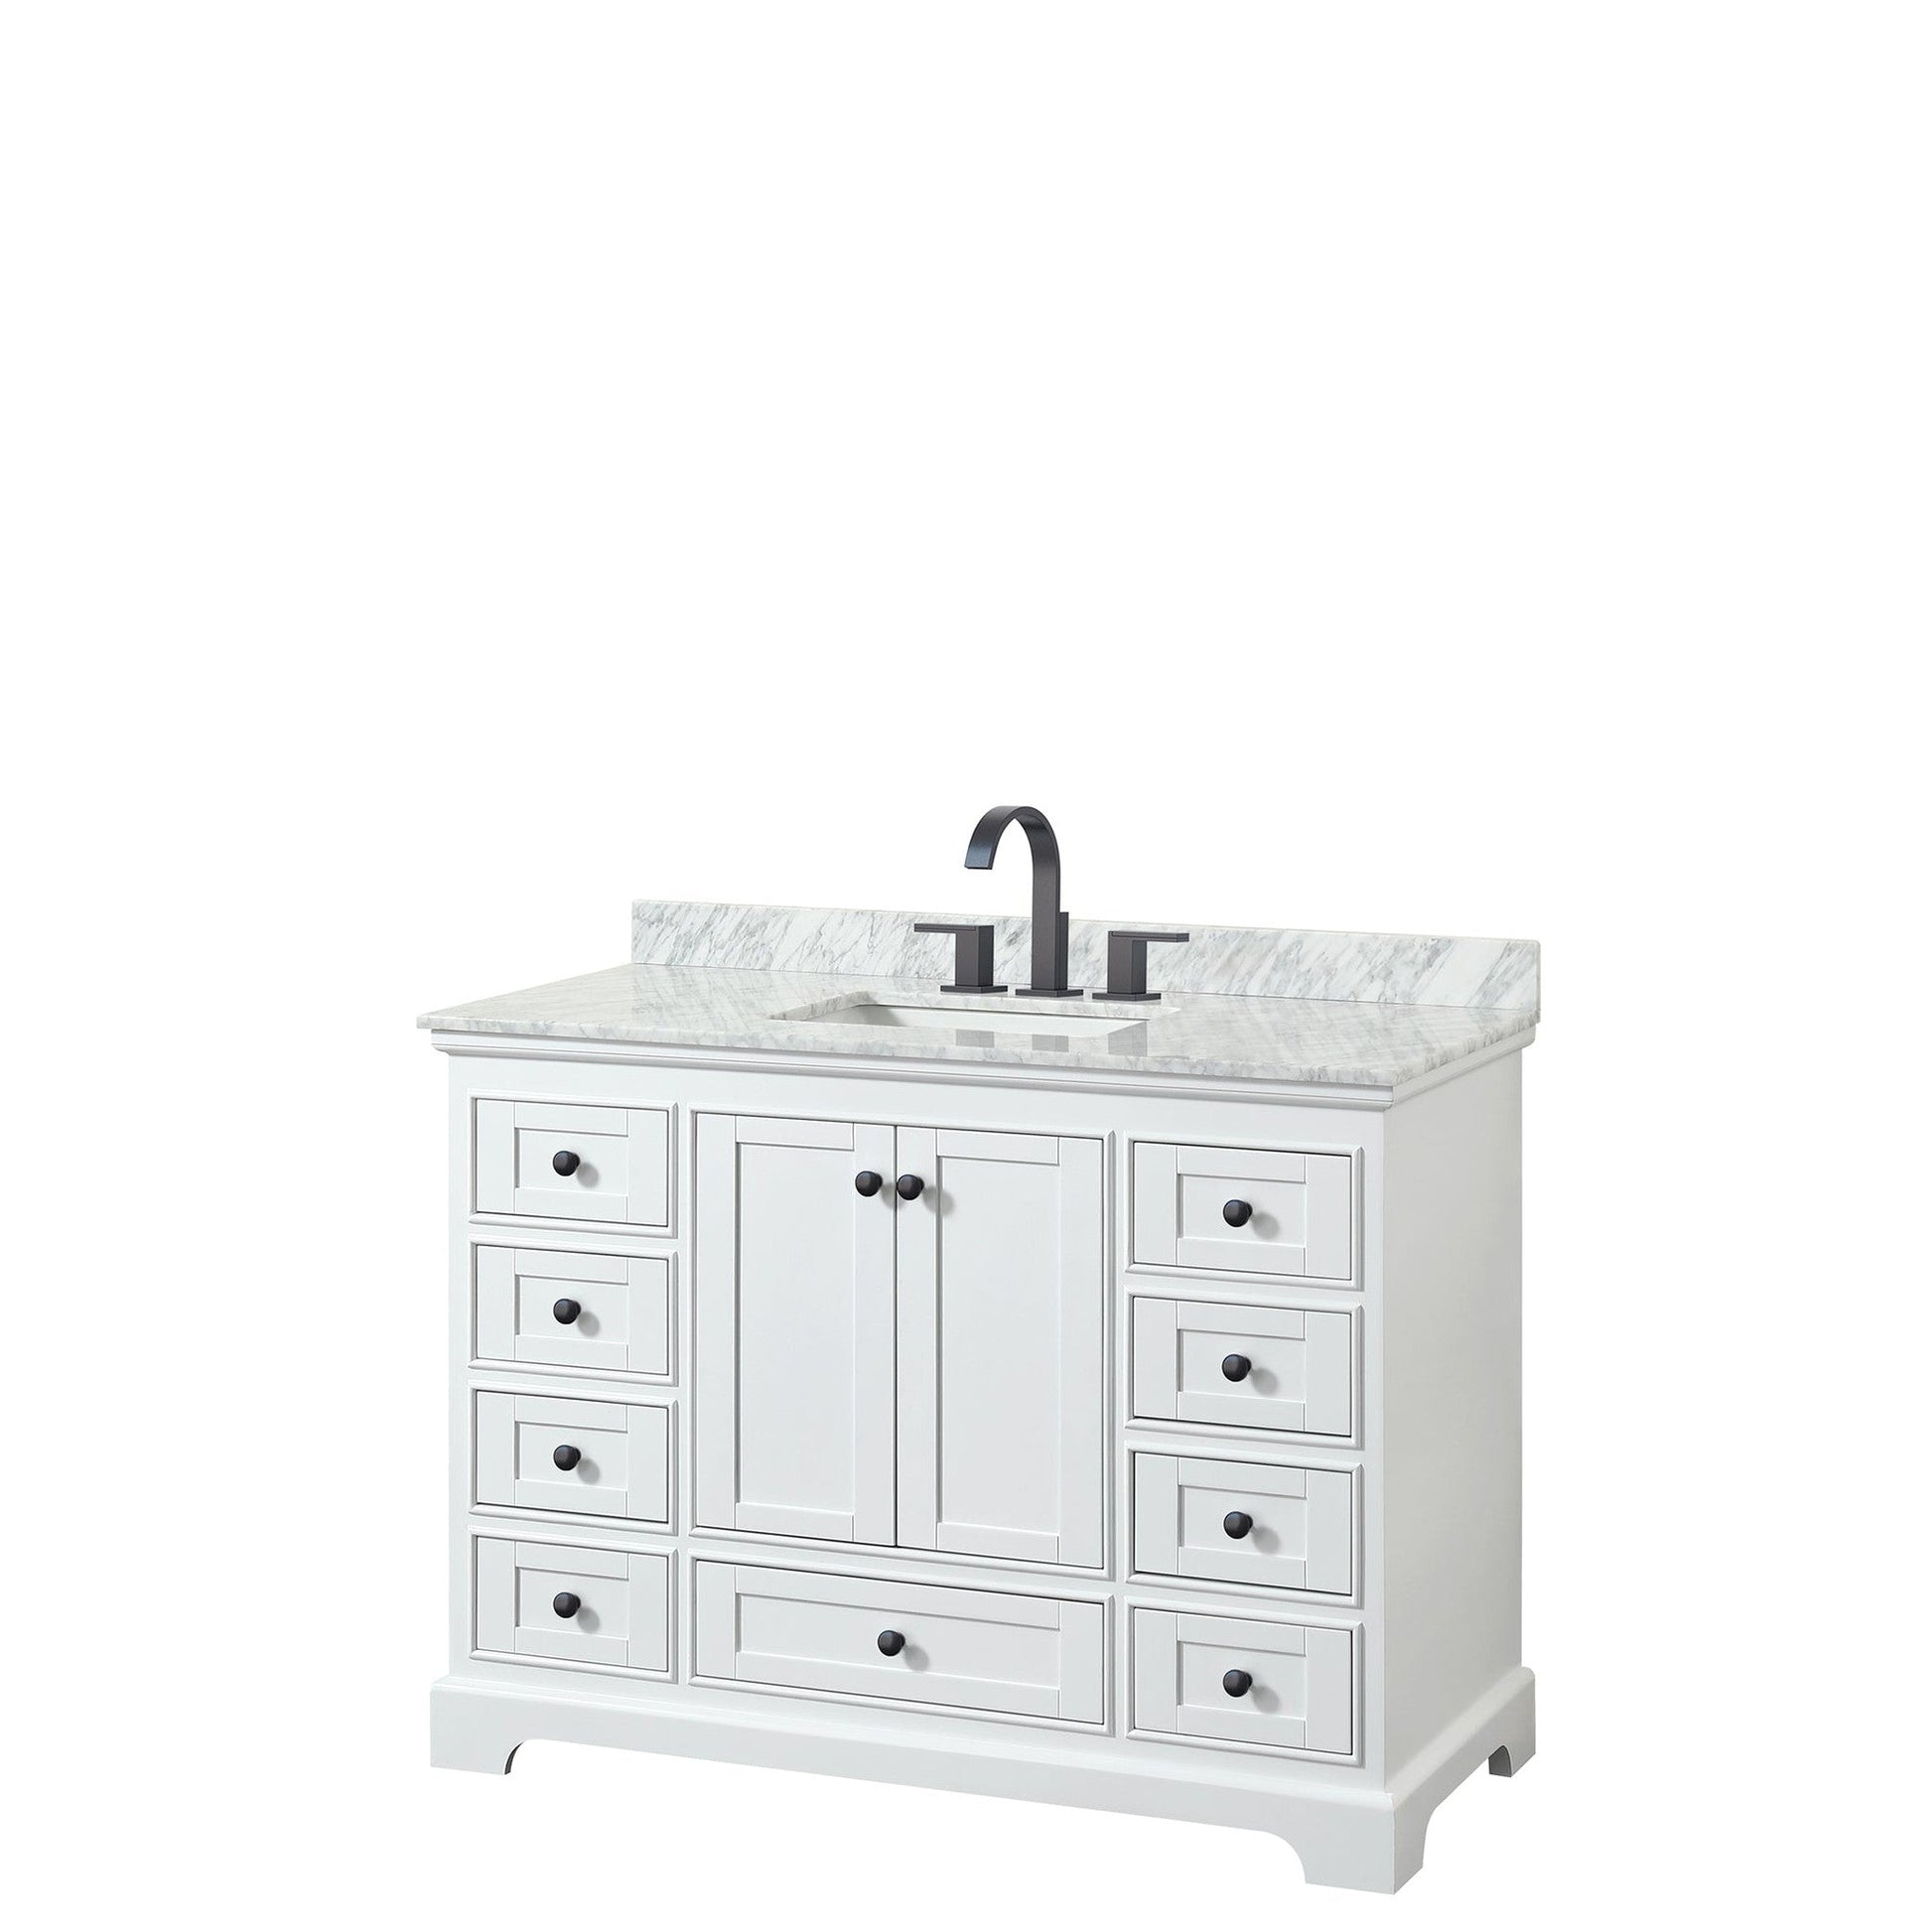 Deborah 48" Single Bathroom Vanity in White, White Carrara Marble Countertop, Undermount Square Sink, Matte Black Trim